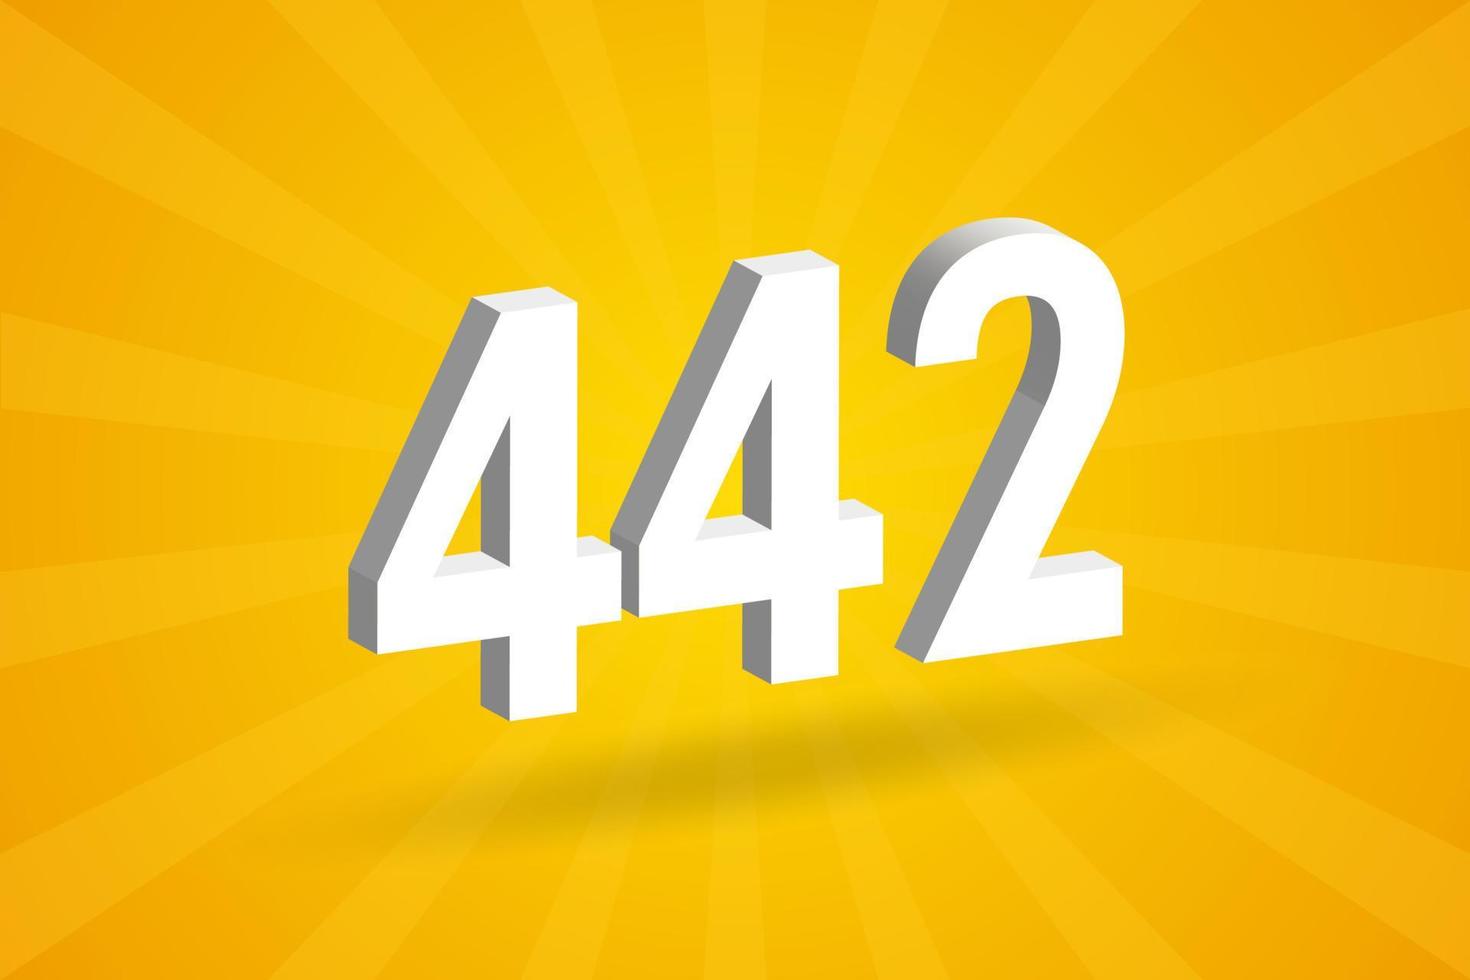 3d 442 siffra font alfabet. vit 3d siffra 442 med gul bakgrund vektor